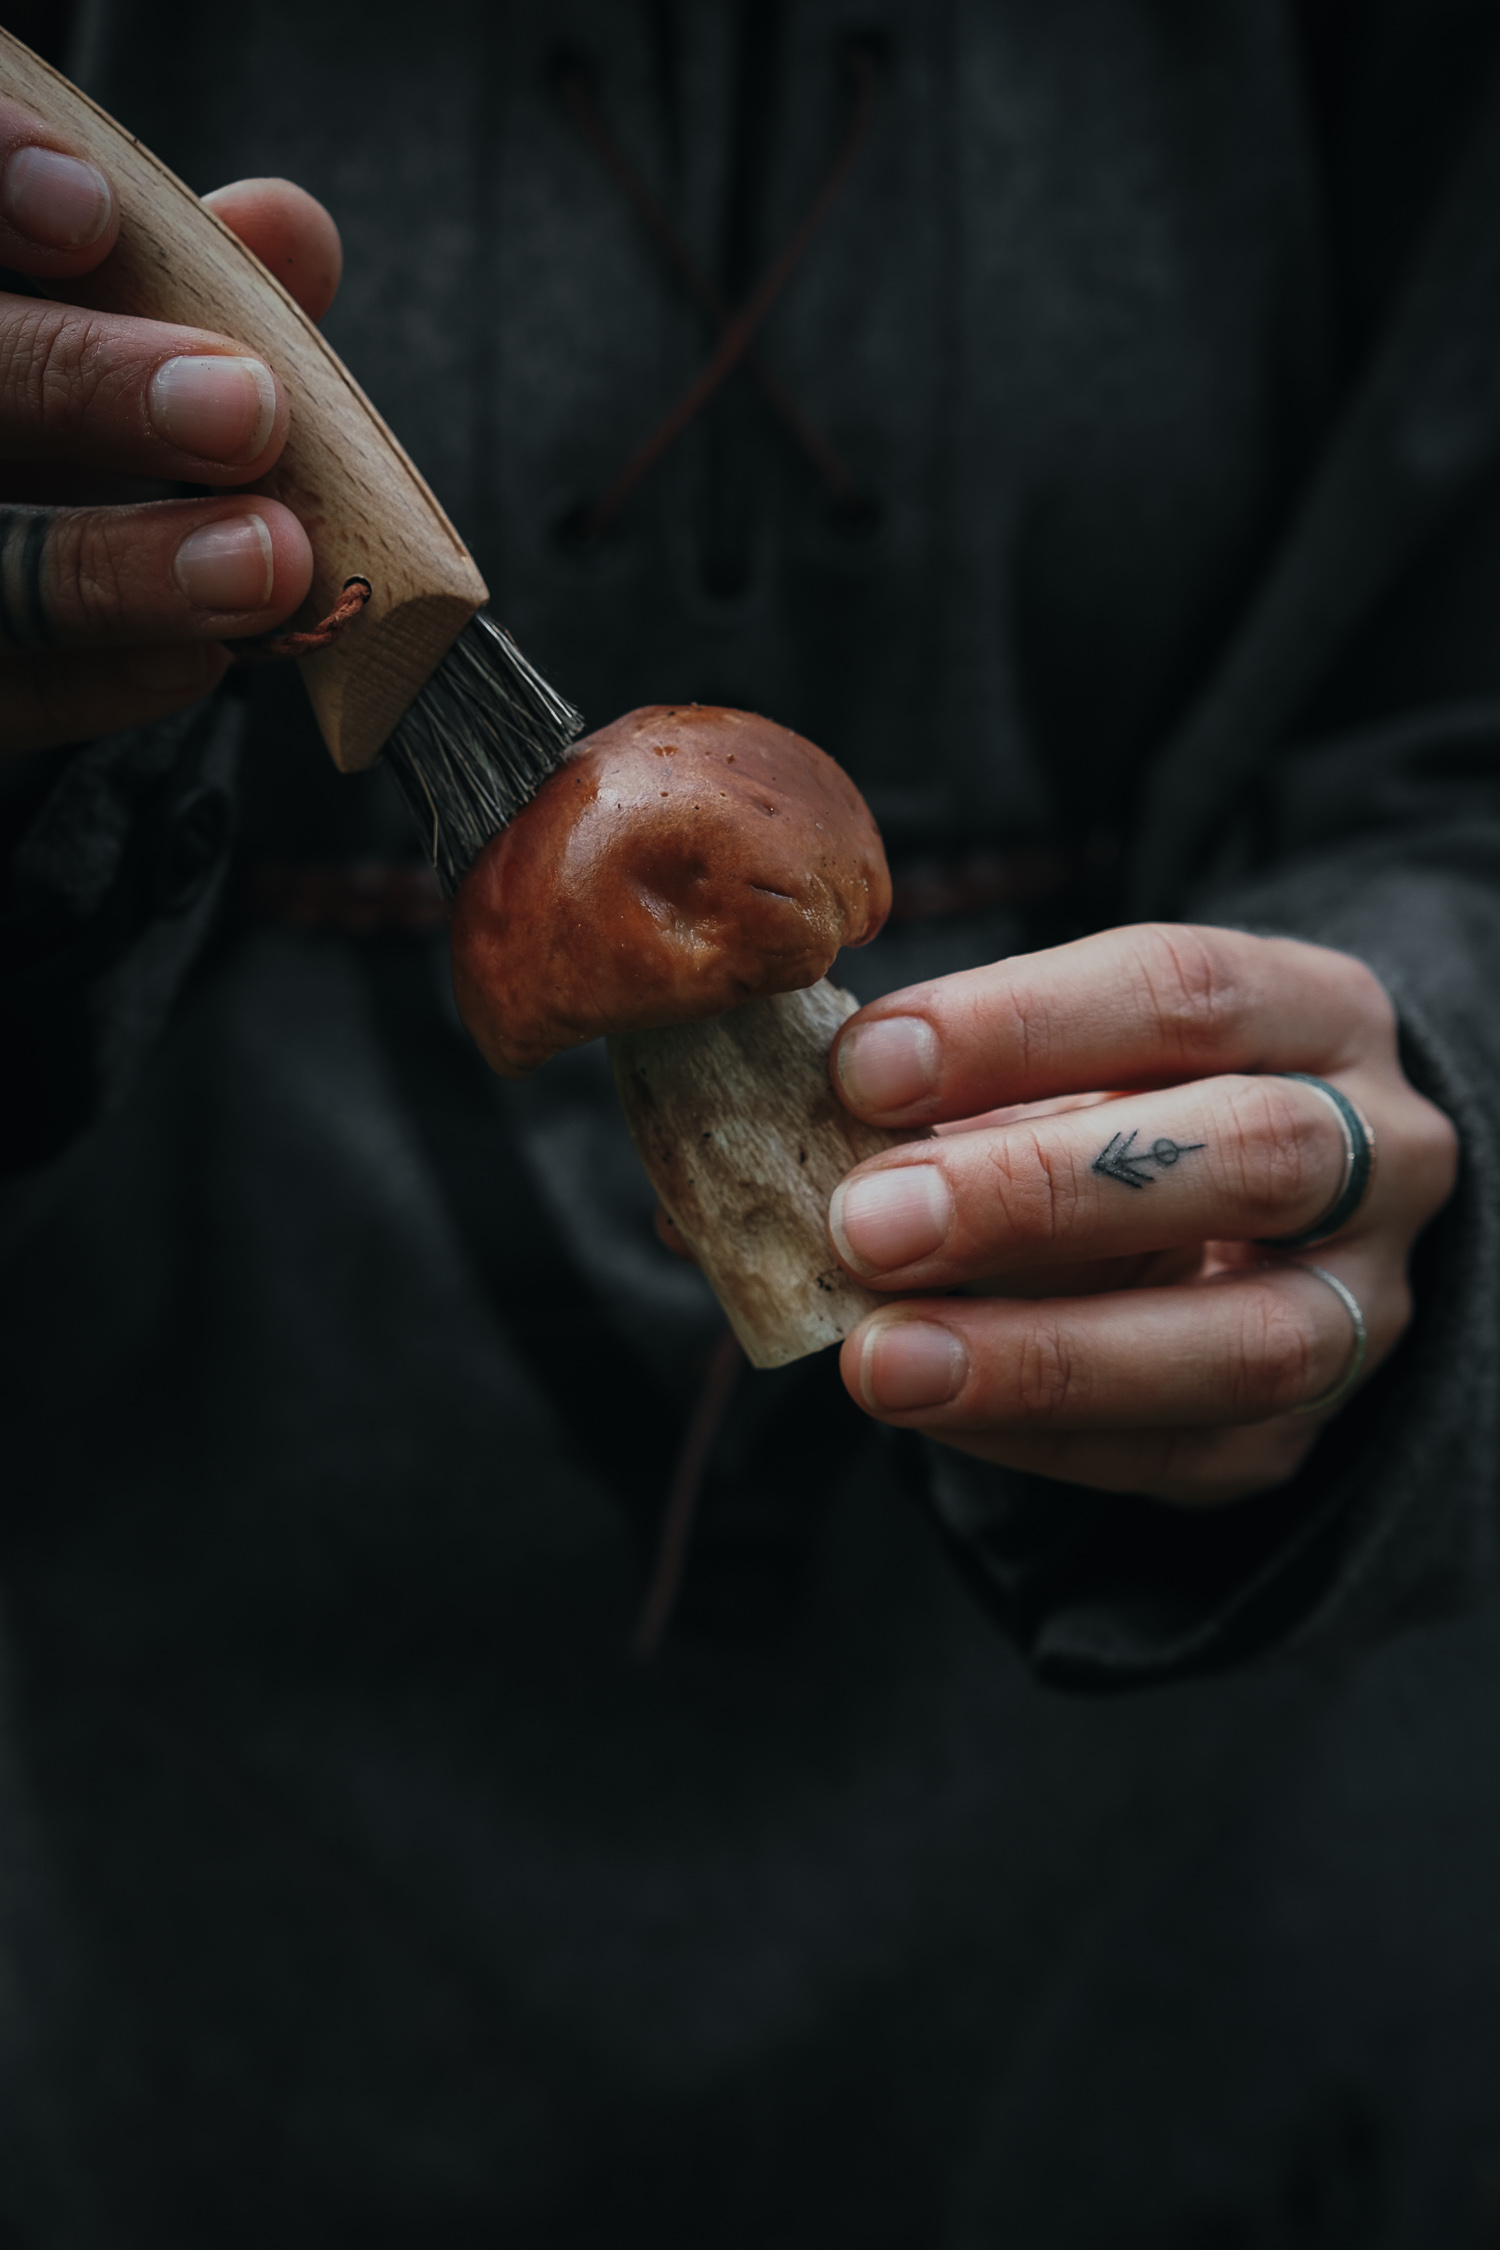 tattooed hands cleaning a bolete mushroom